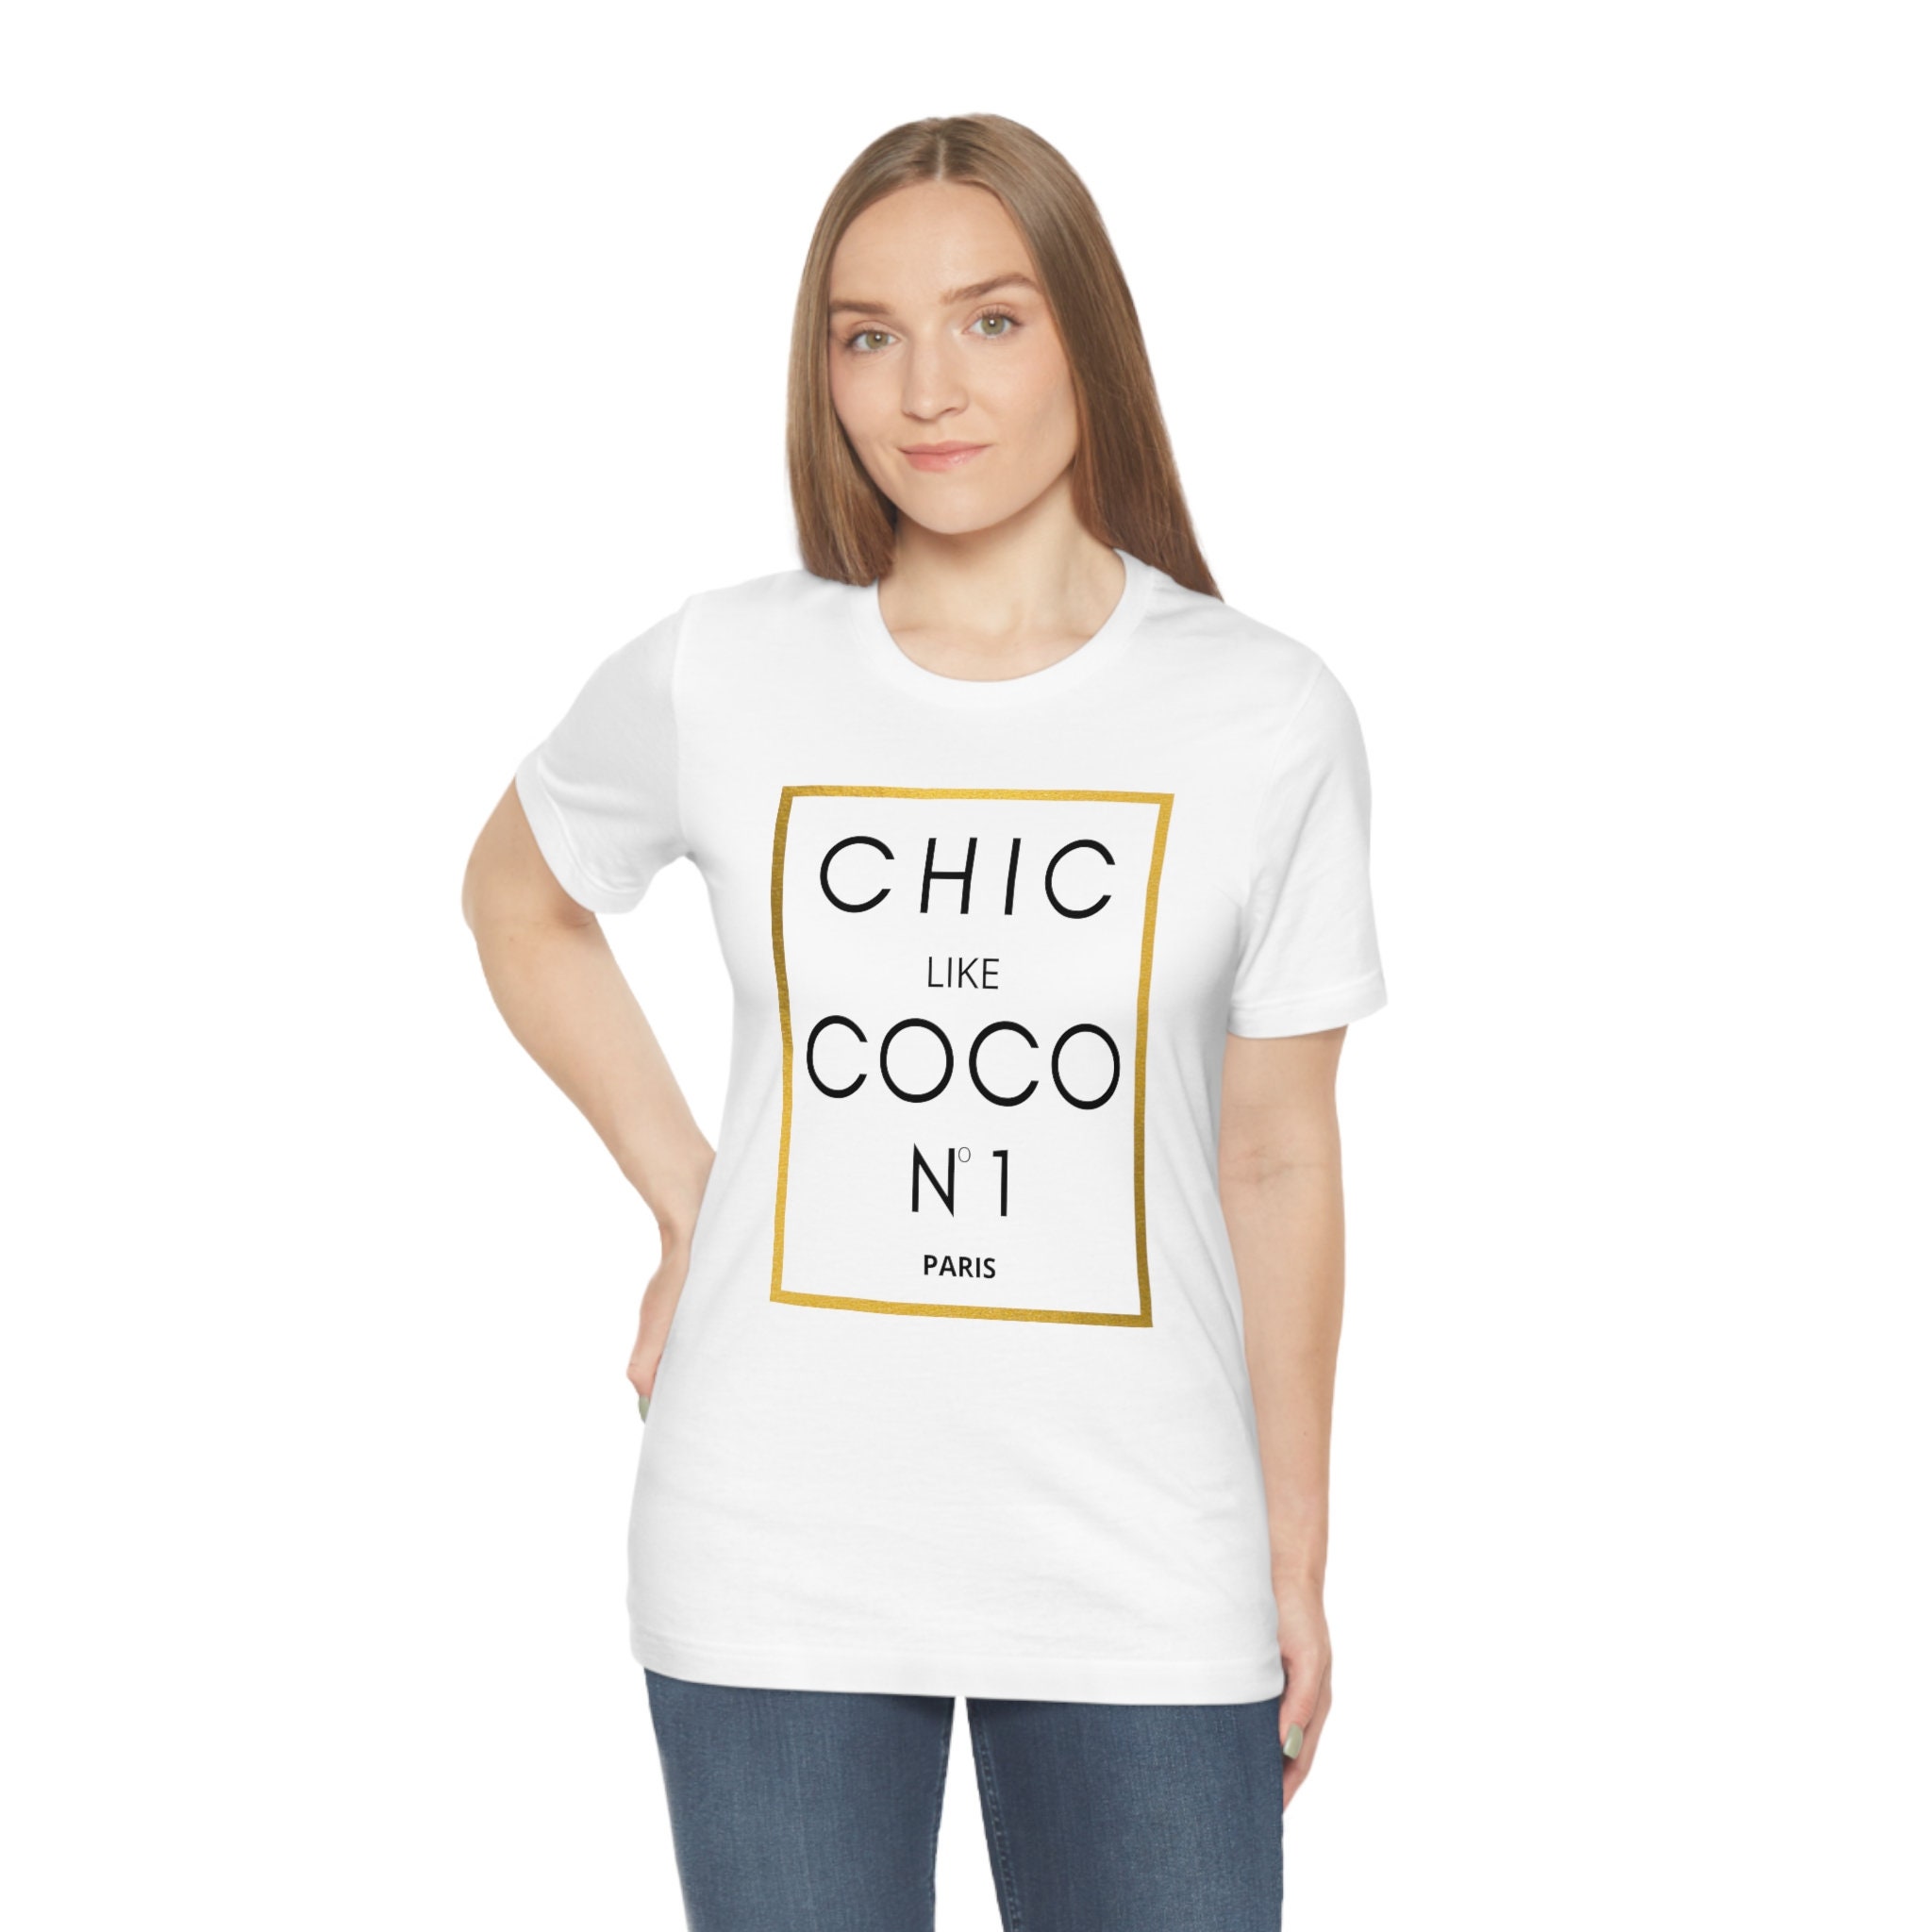 Chic Like Coco Graphic T-shirt T-shirt for Women T-shirts 